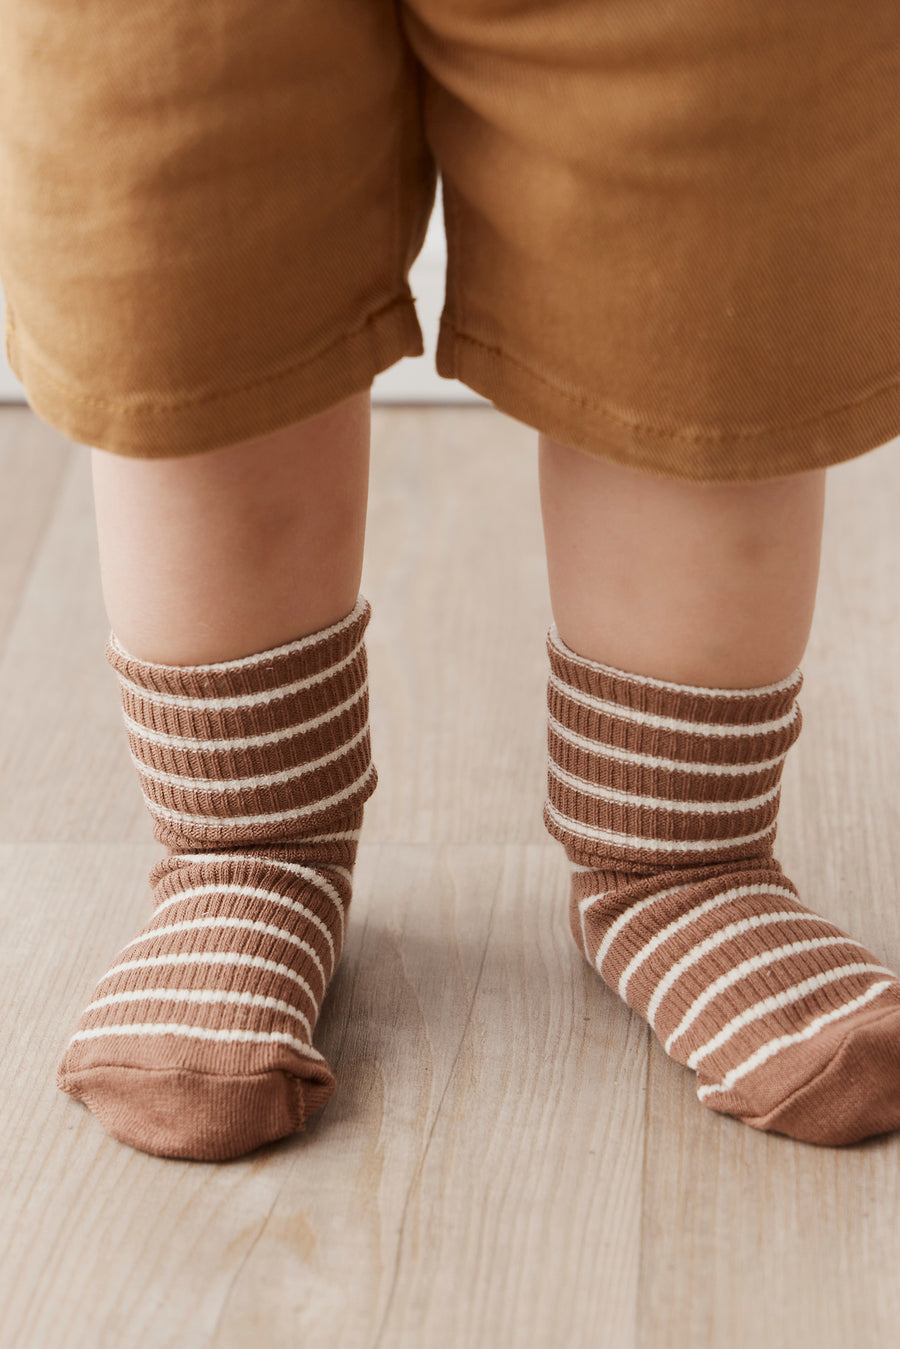 Classic Rib Sock - Hazelnut Stripe Childrens Sock from Jamie Kay NZ